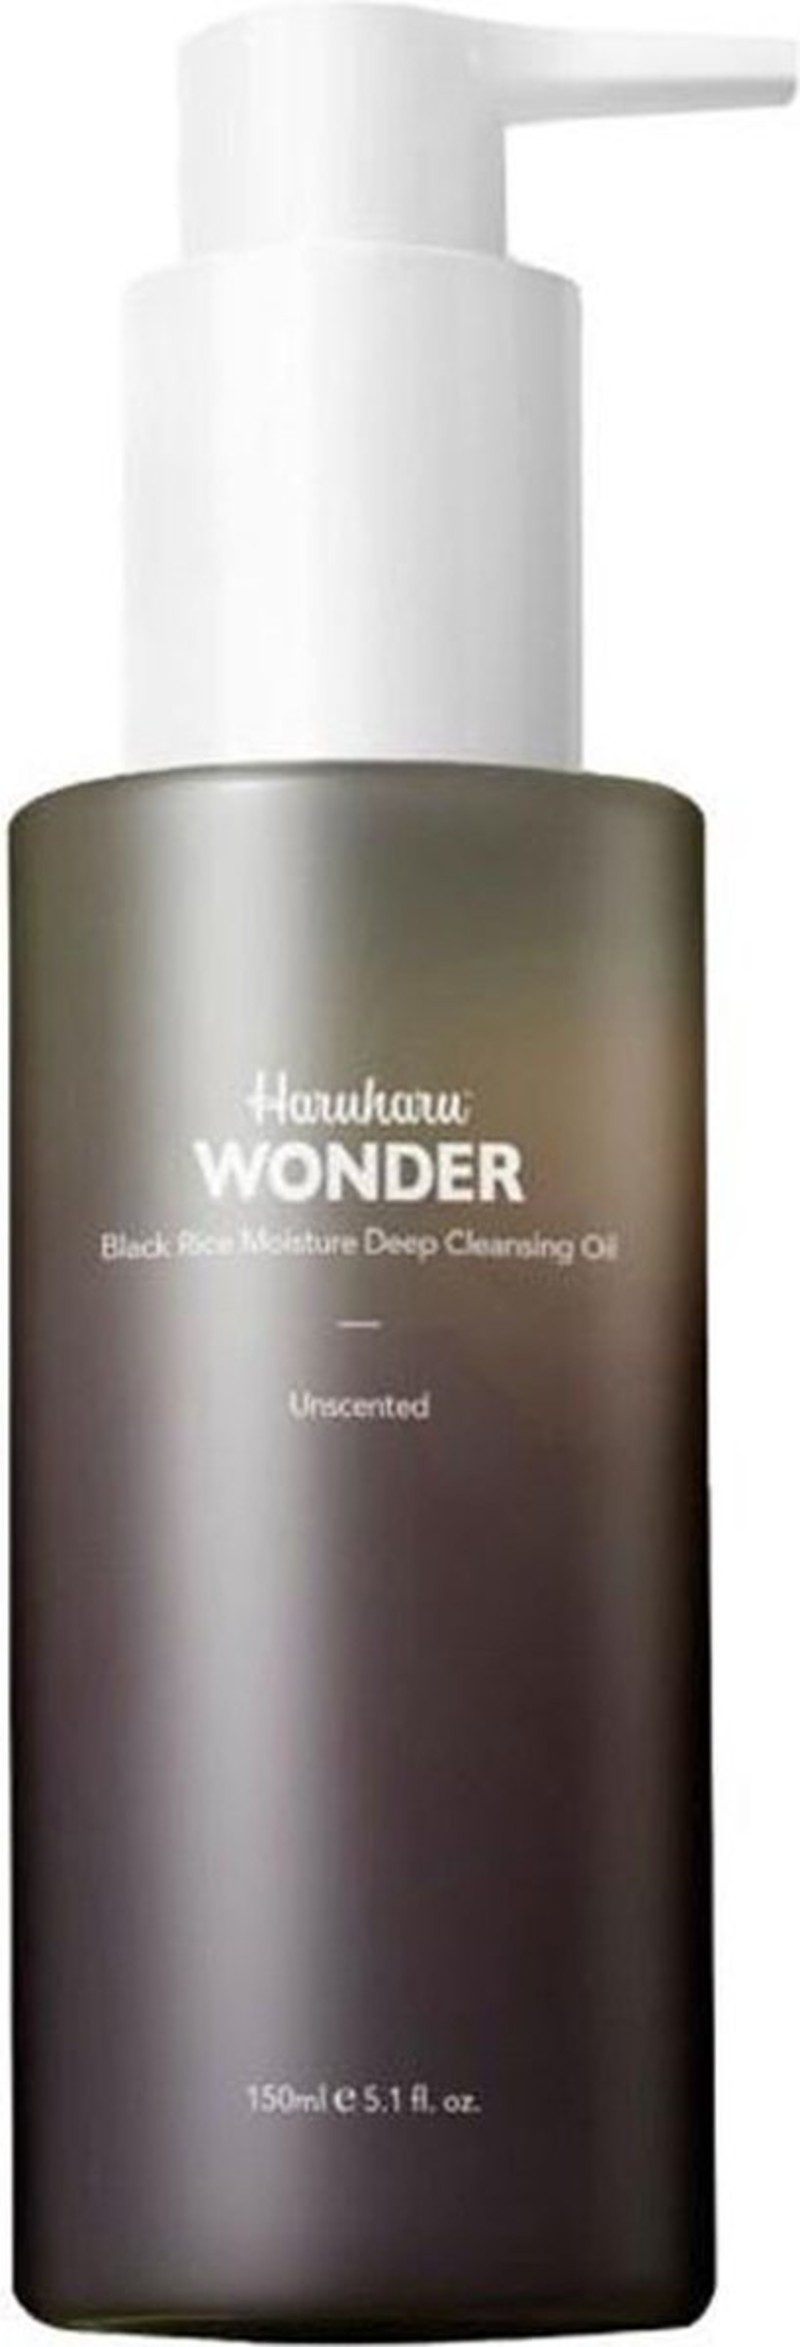 Haruharu WONDER Black Rice Moisture Deep Cleansing Oil Makeup Remover 150 ml